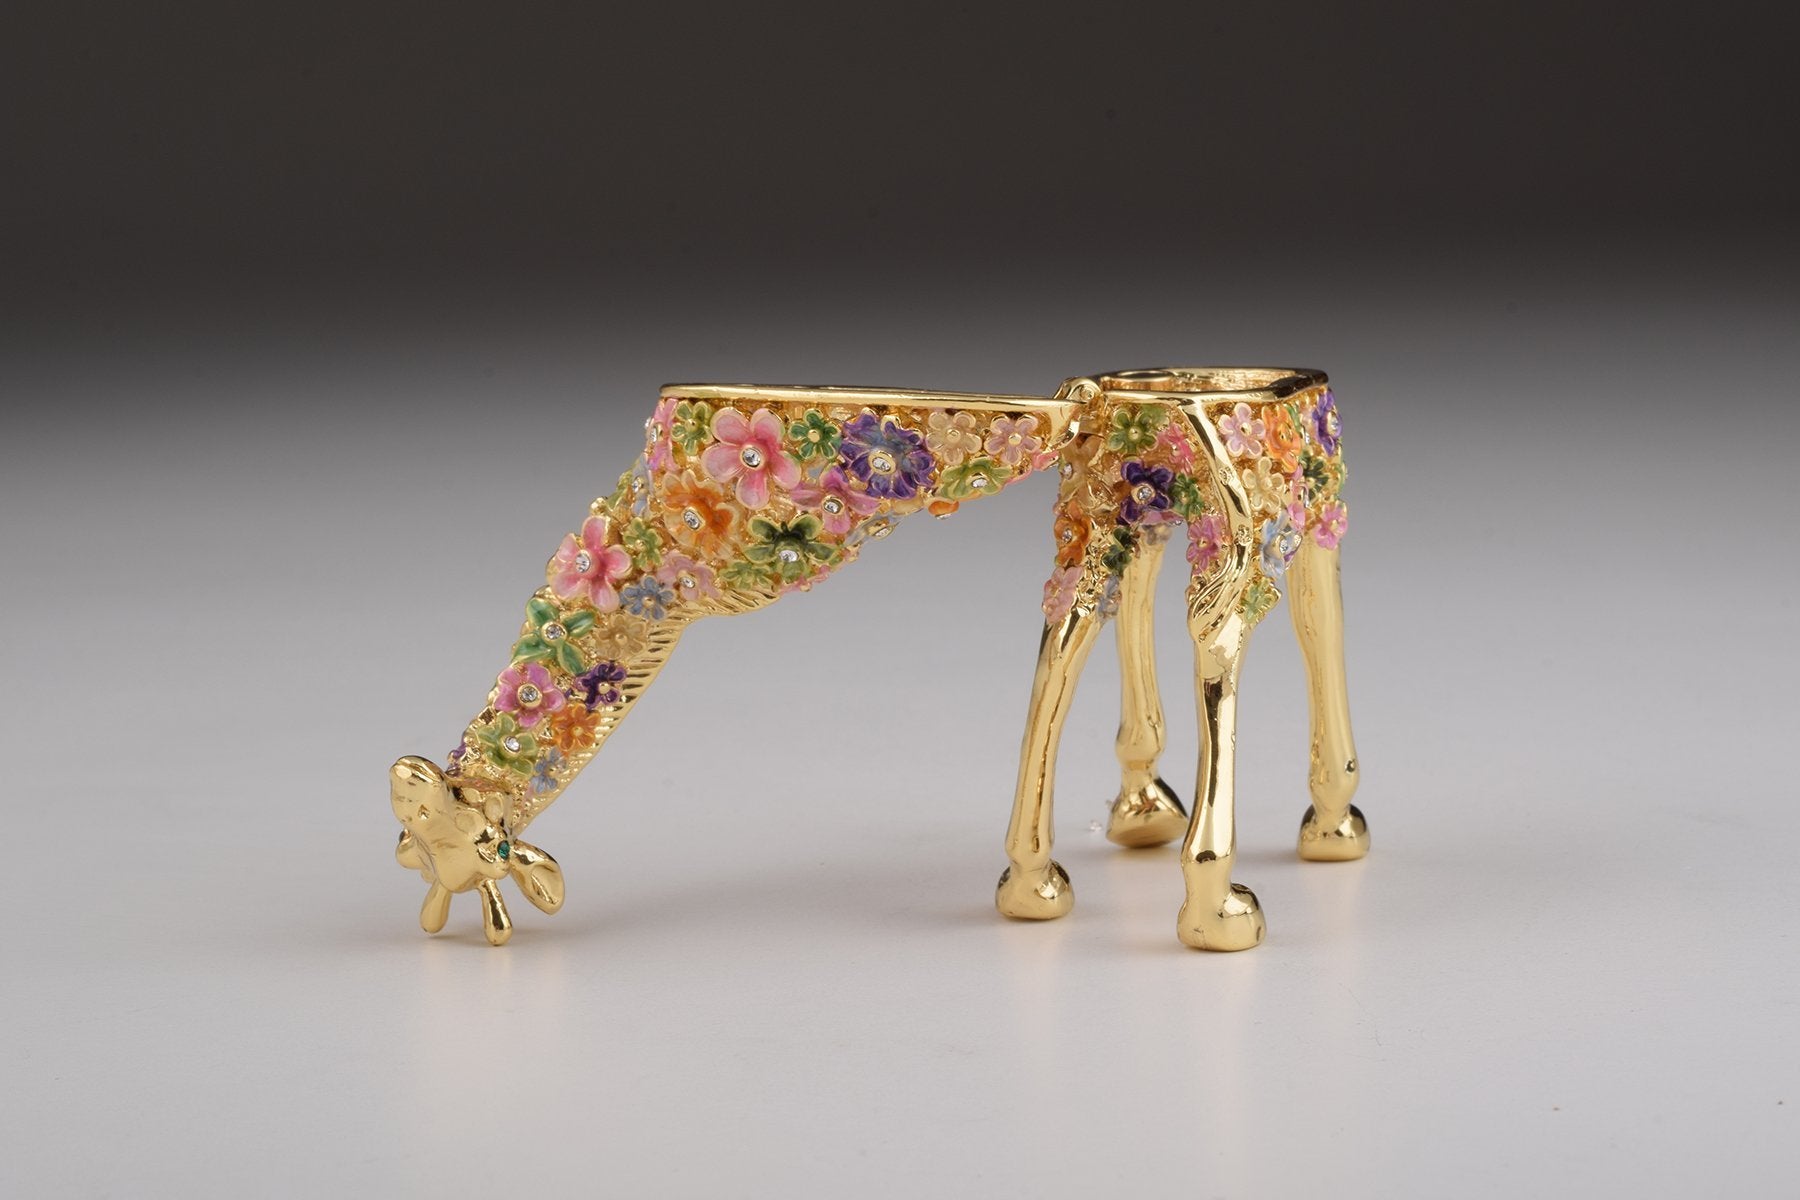 Keren Kopal Gold Giraffe with Colorful Flowers Trinket Box  104.00